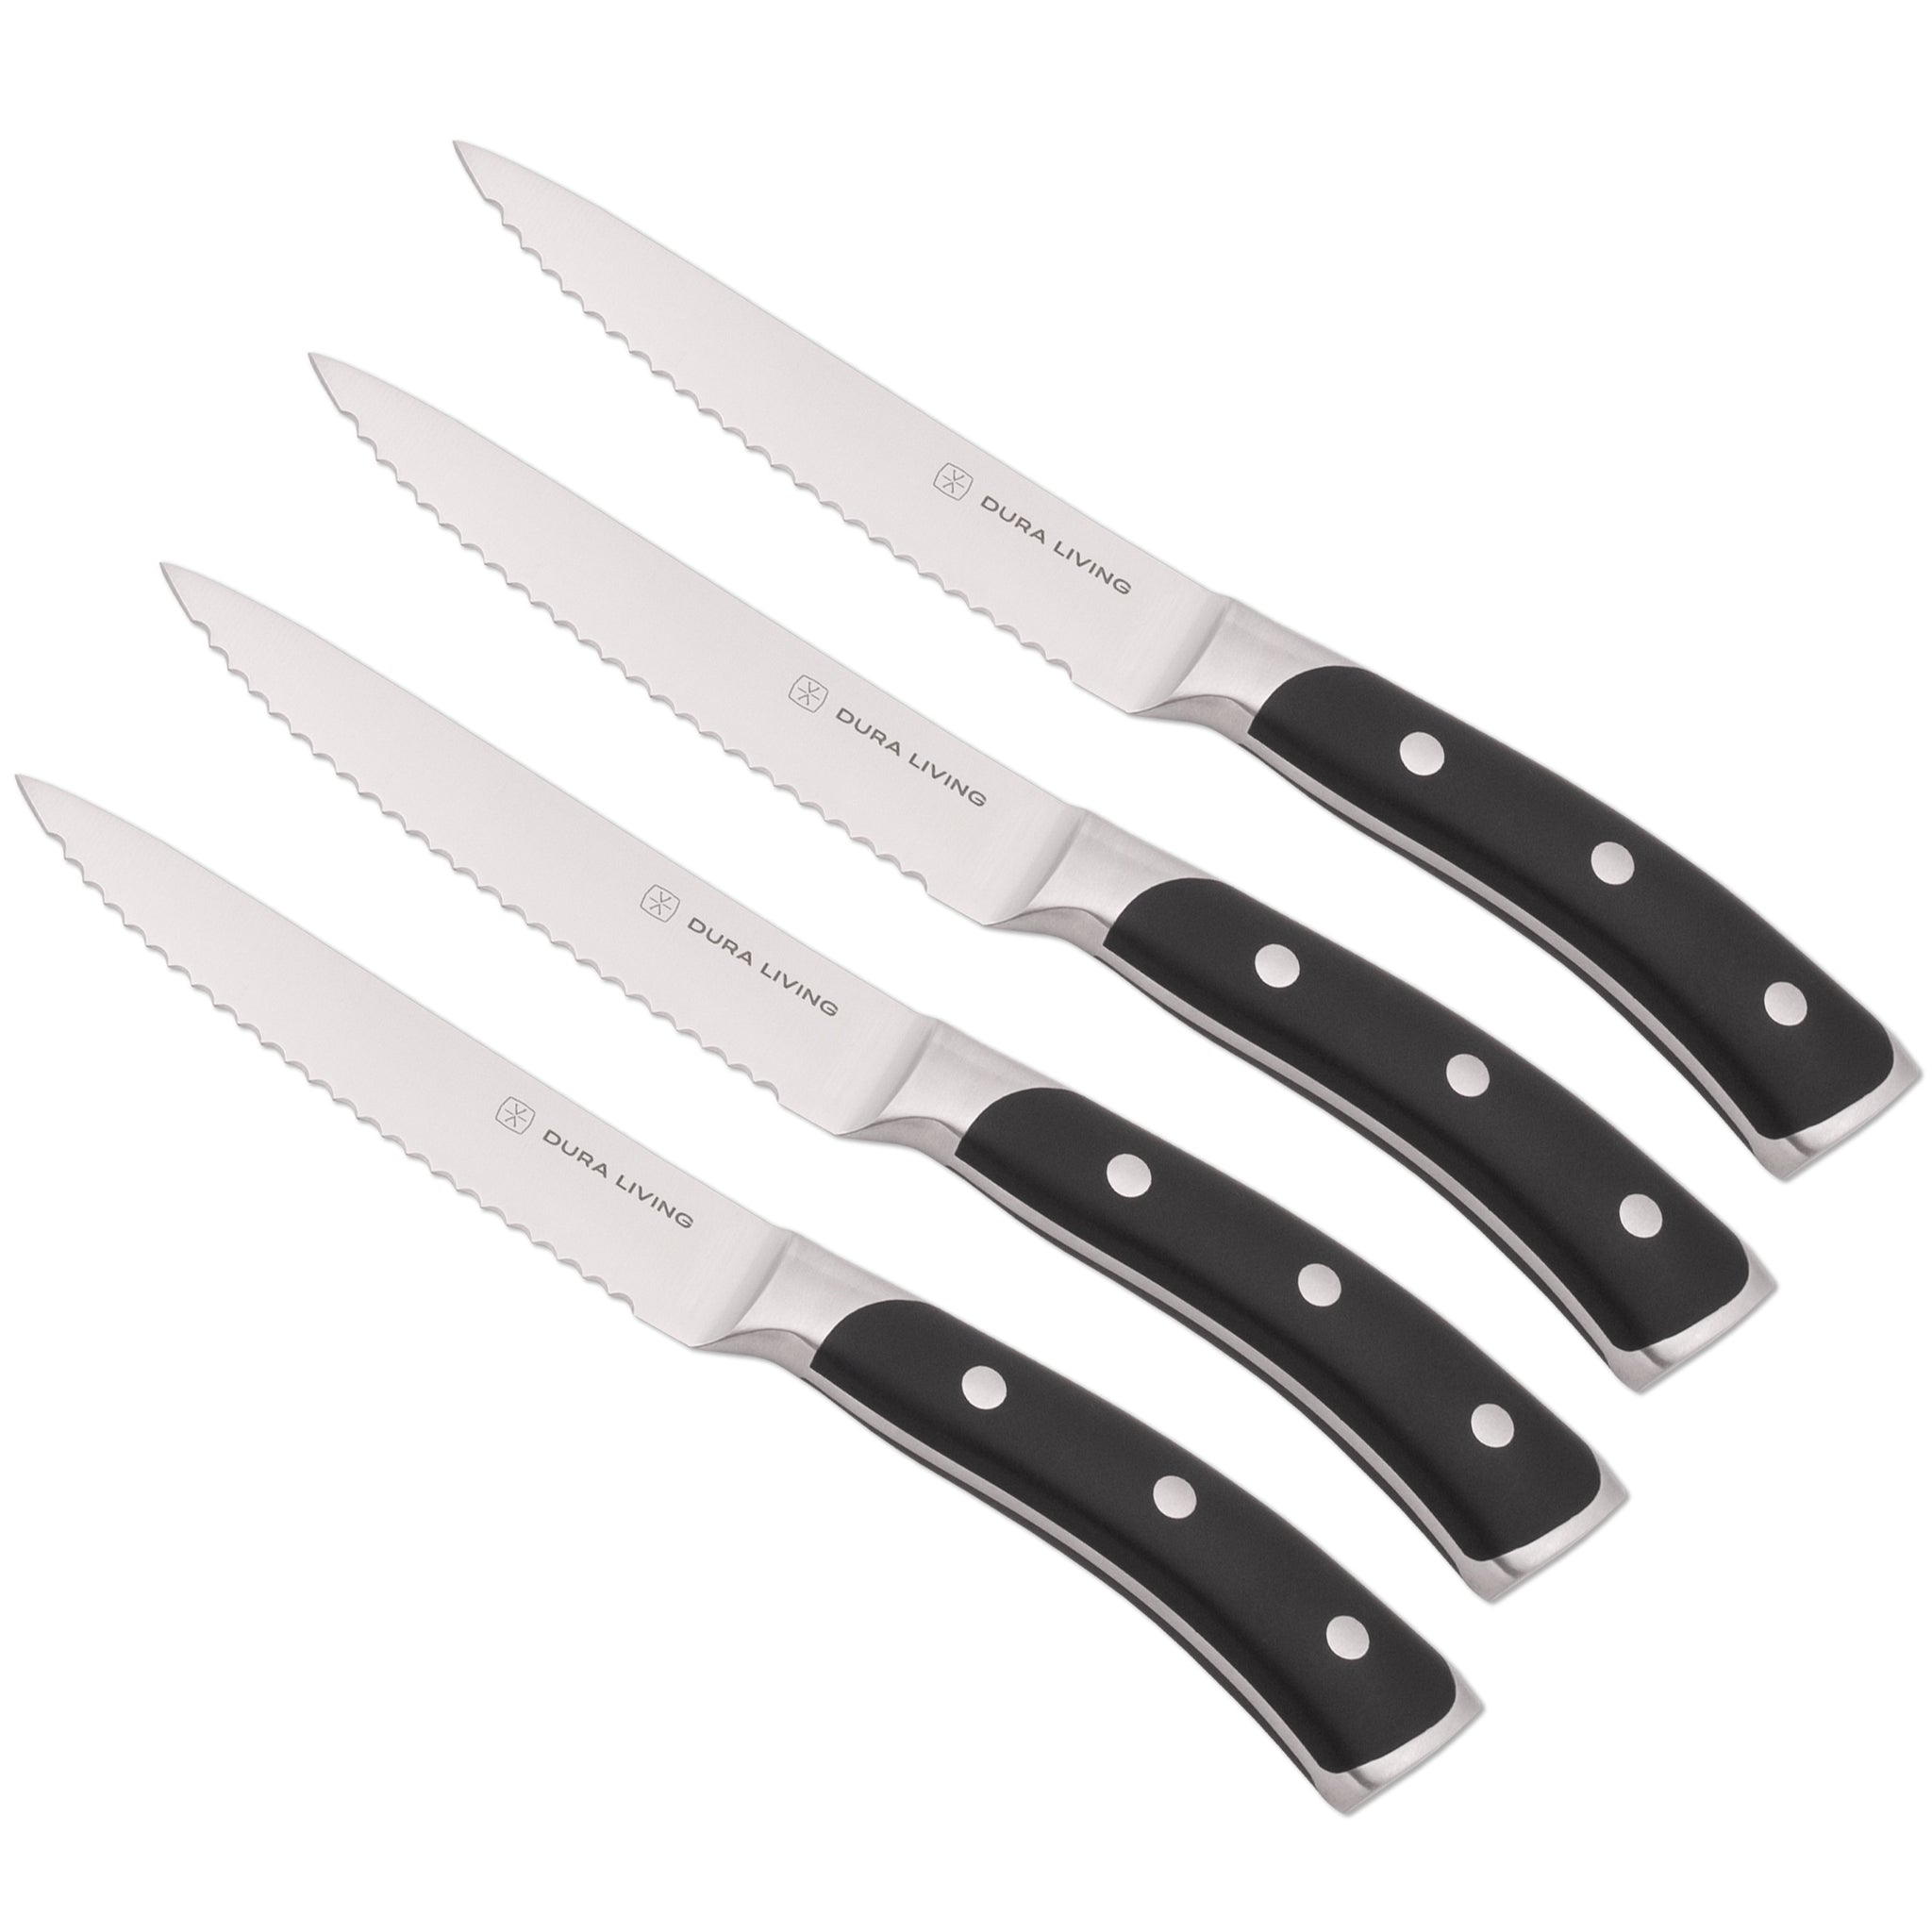 Dura Living Elite Series 8 Piece Stainless Steel Steak Knife Set, Cream